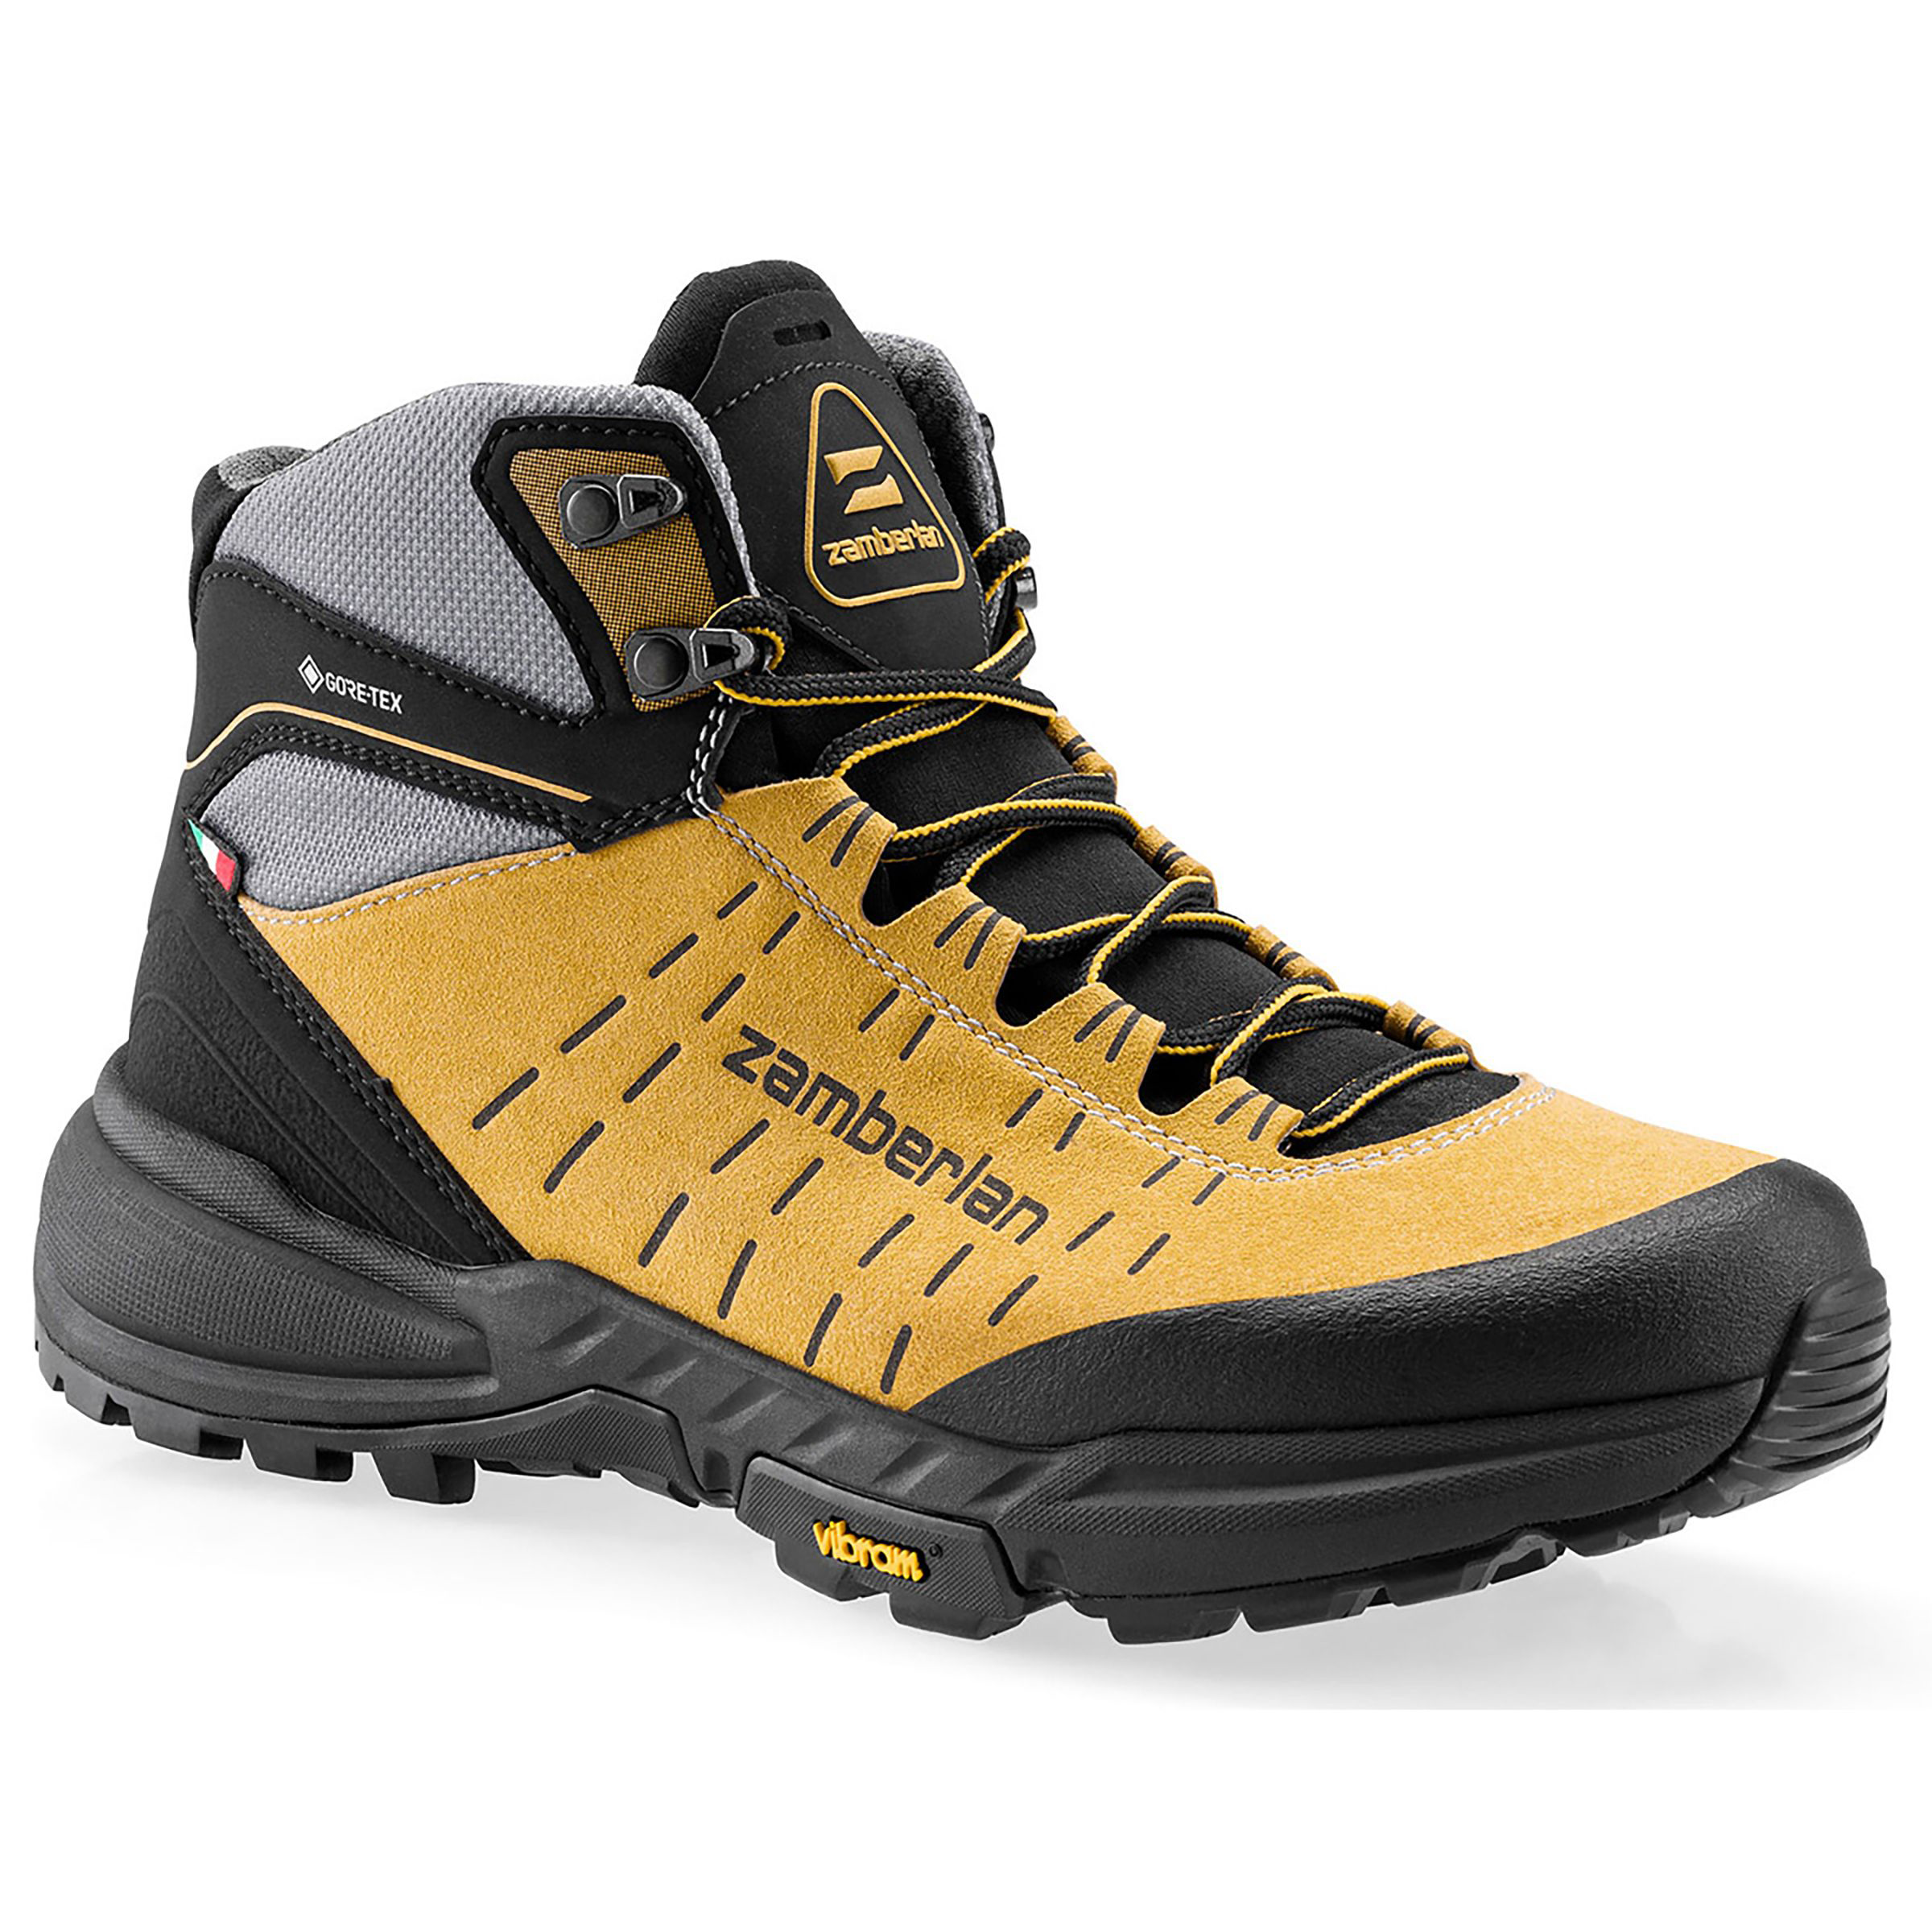 Zamberlan 334 Circe GTX Waterproof Hiking Boots for Ladies - Yellow - 7.5M